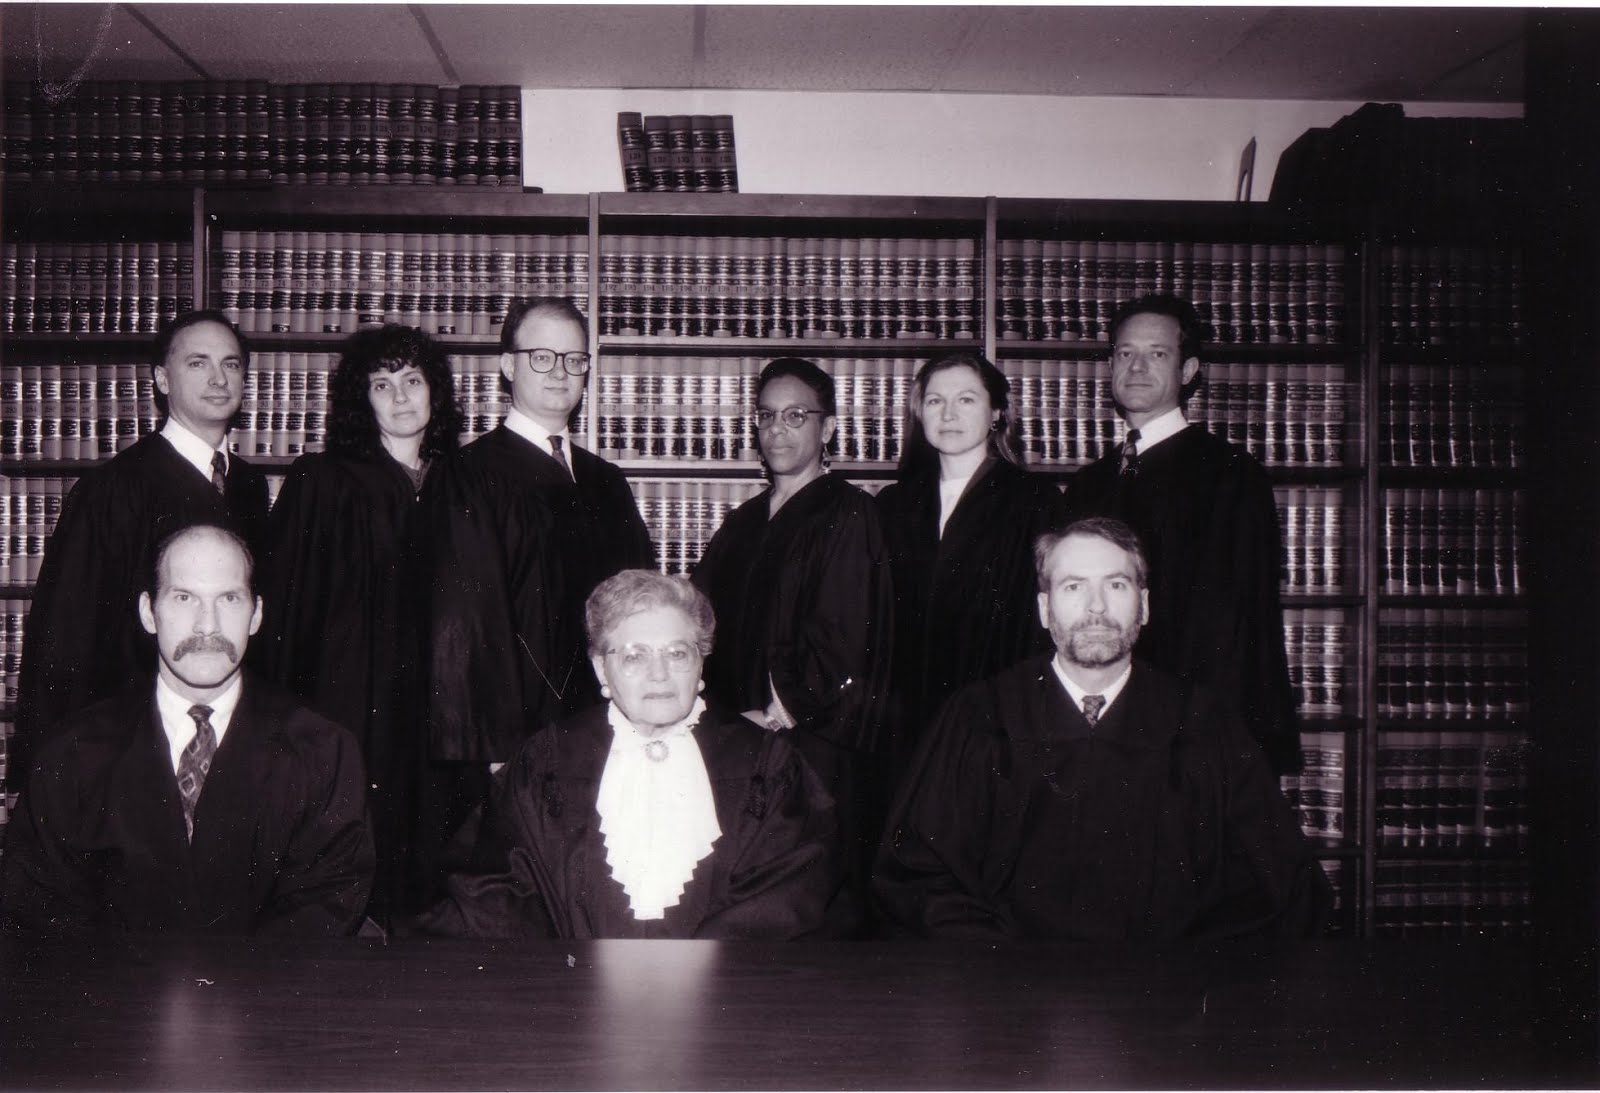 The judicial gang